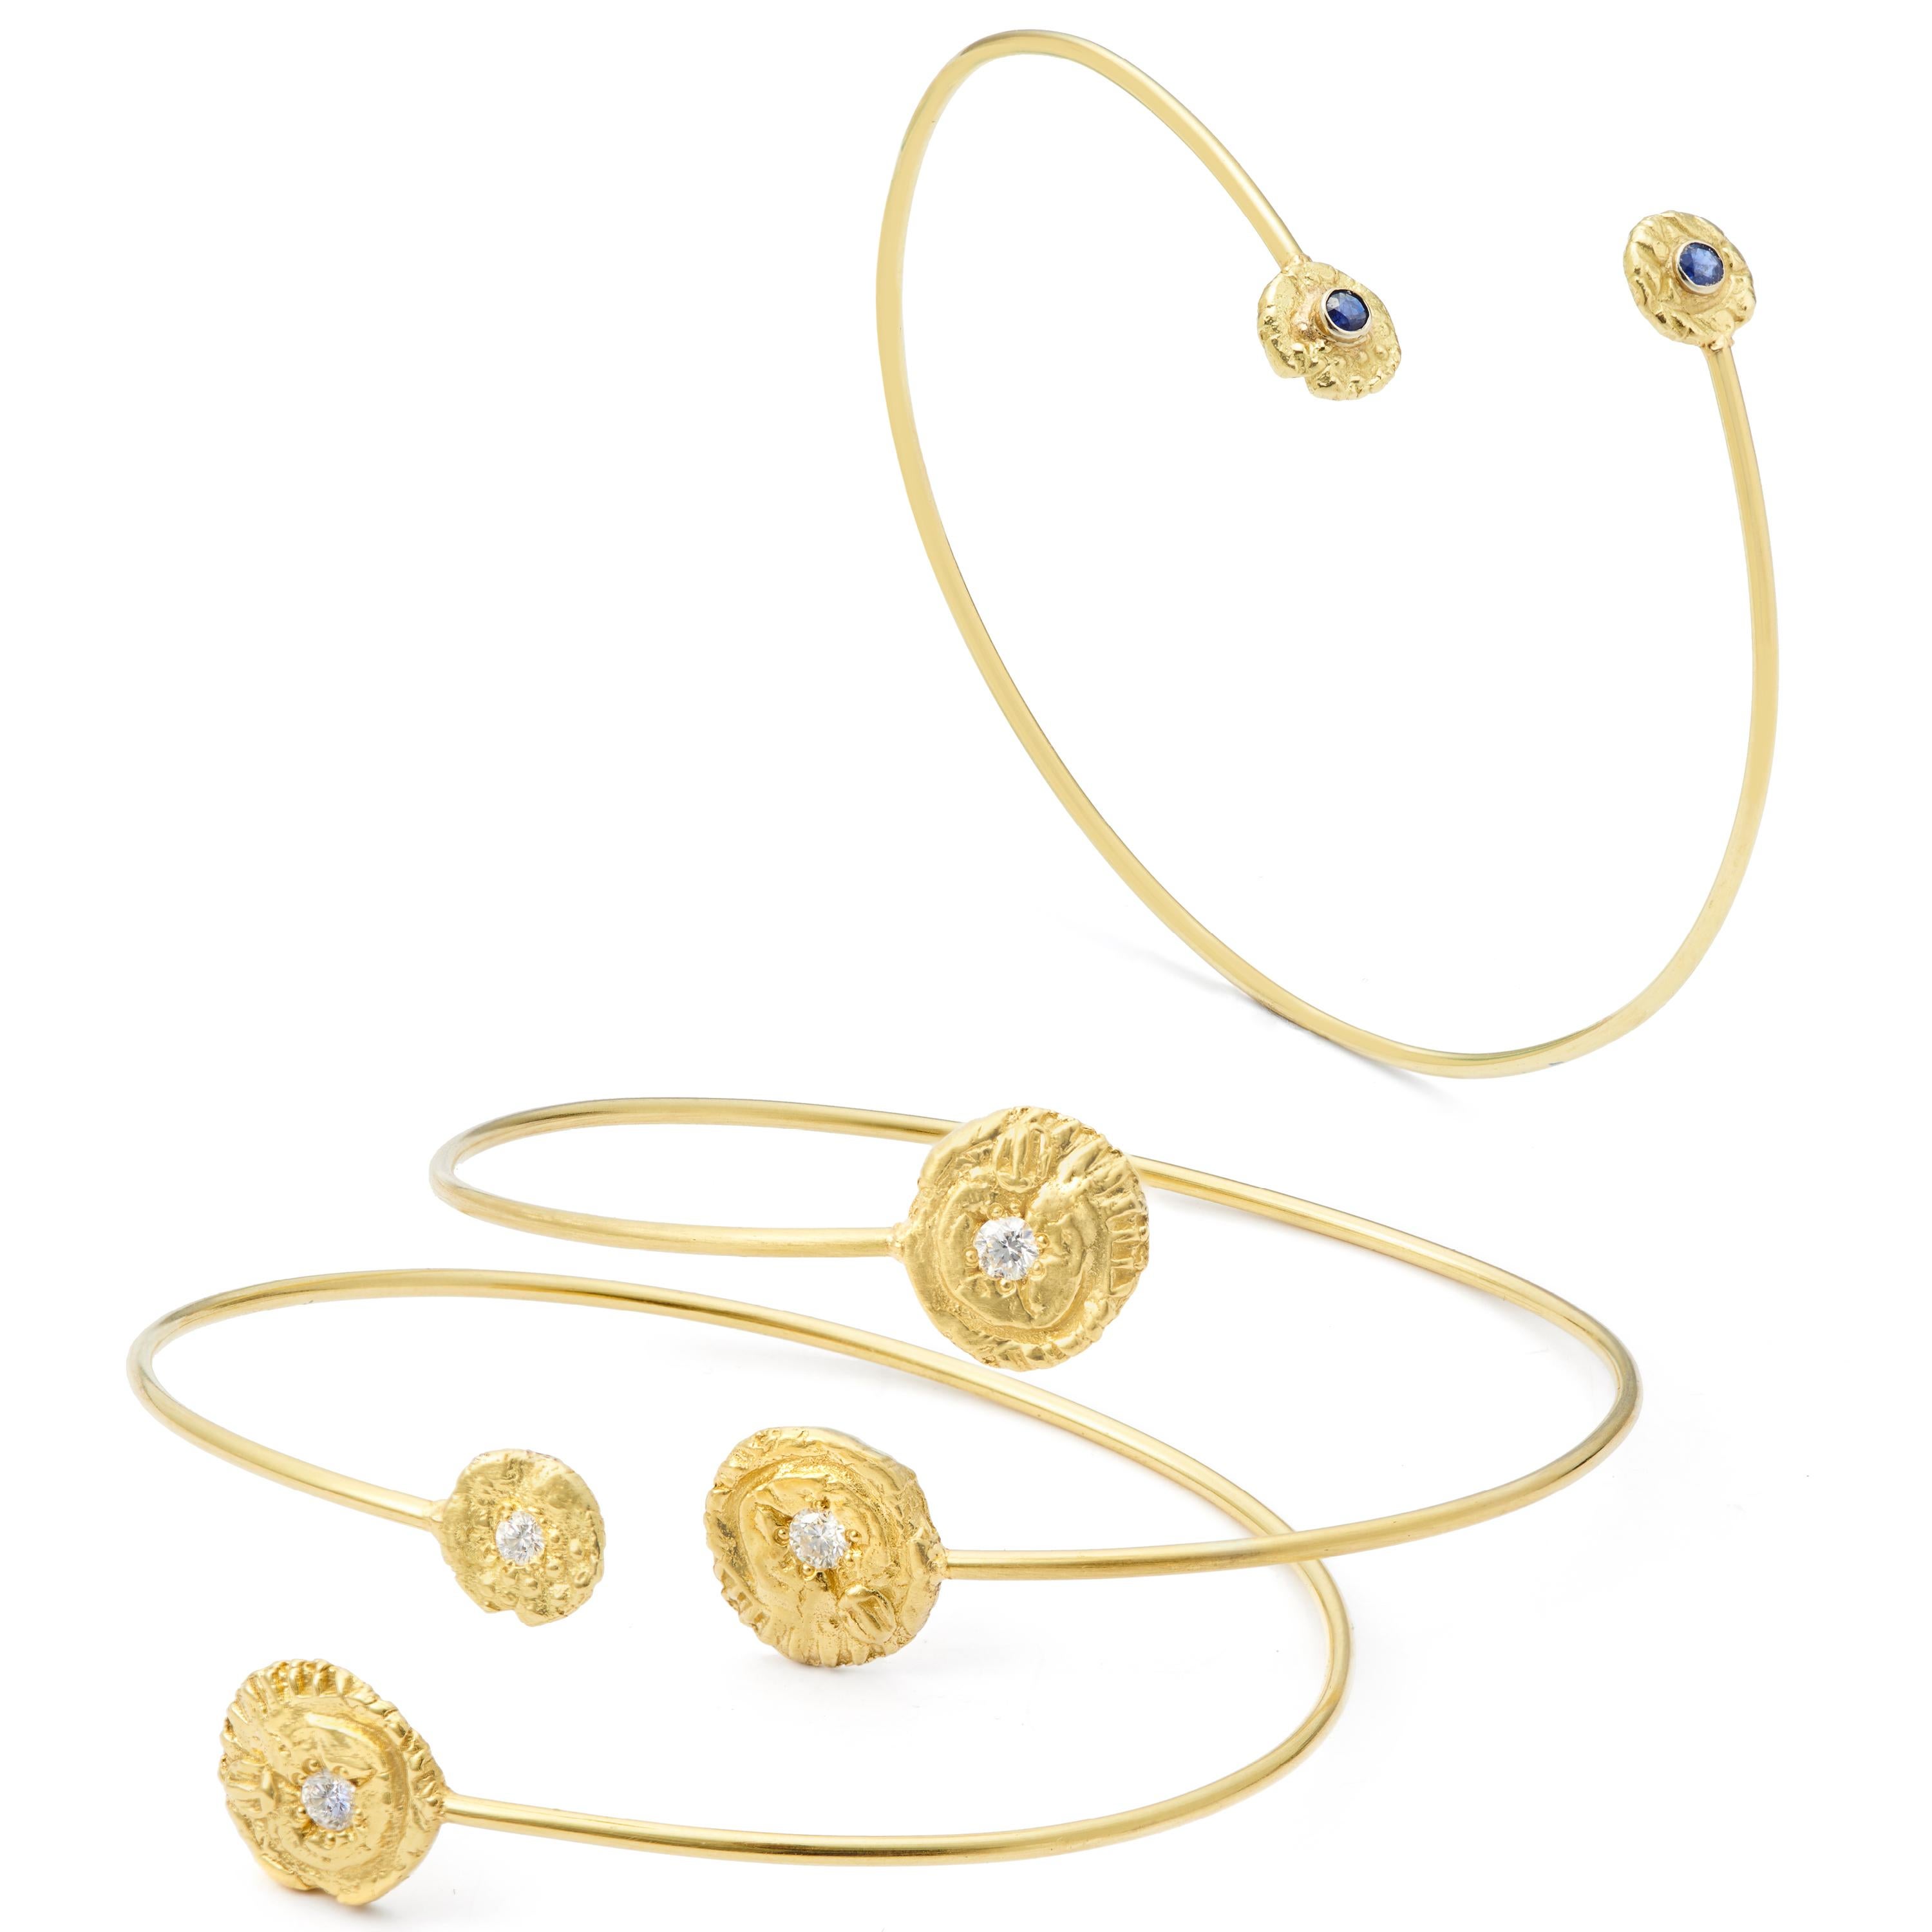 Brilliant Cut Susan Lister Locke “Sea Star” and 0.20 Carat Diamond Bypass Bracelet in 18K Gold For Sale